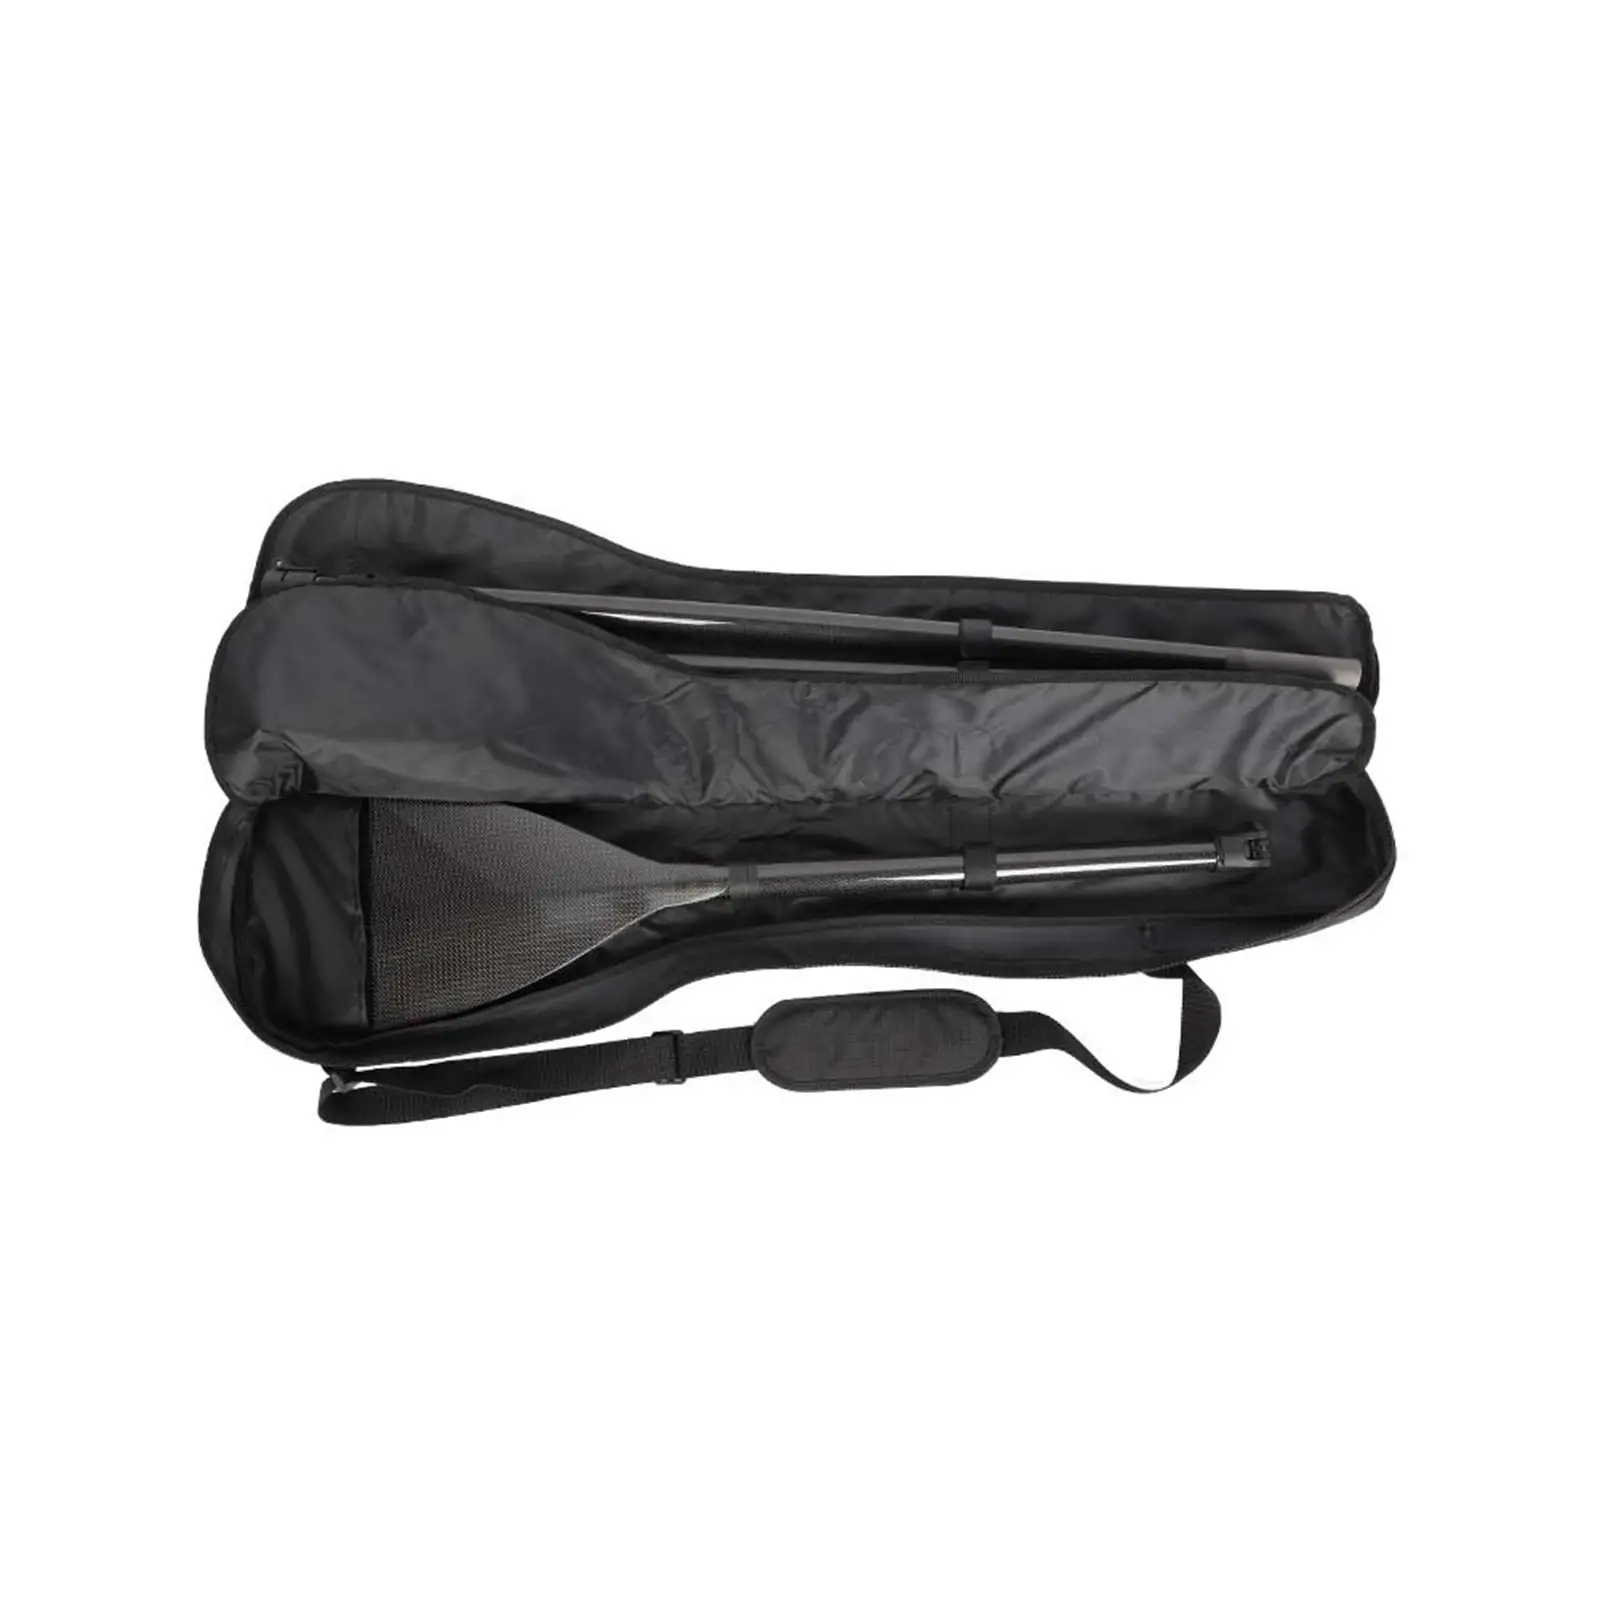 Adjustable SUP Paddle Storage Bag for 3 Piece Split Paddle Kayak Accessories